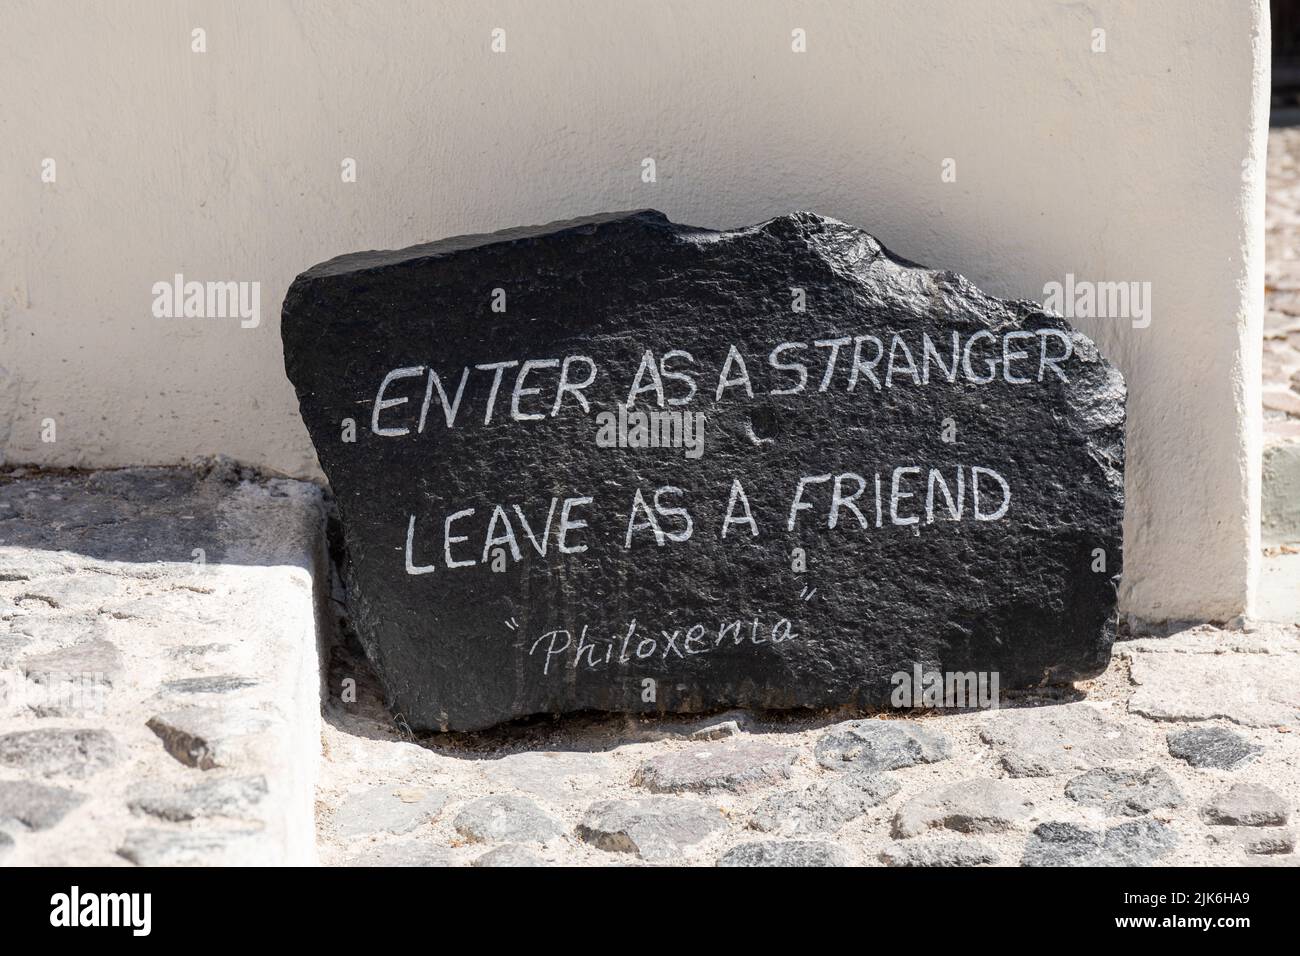 Enter as a Stranger leave as a Friend - Philoxenia, A welcome message  in Pyrgos Village, Santorini, Greece, Europe Stock Photo